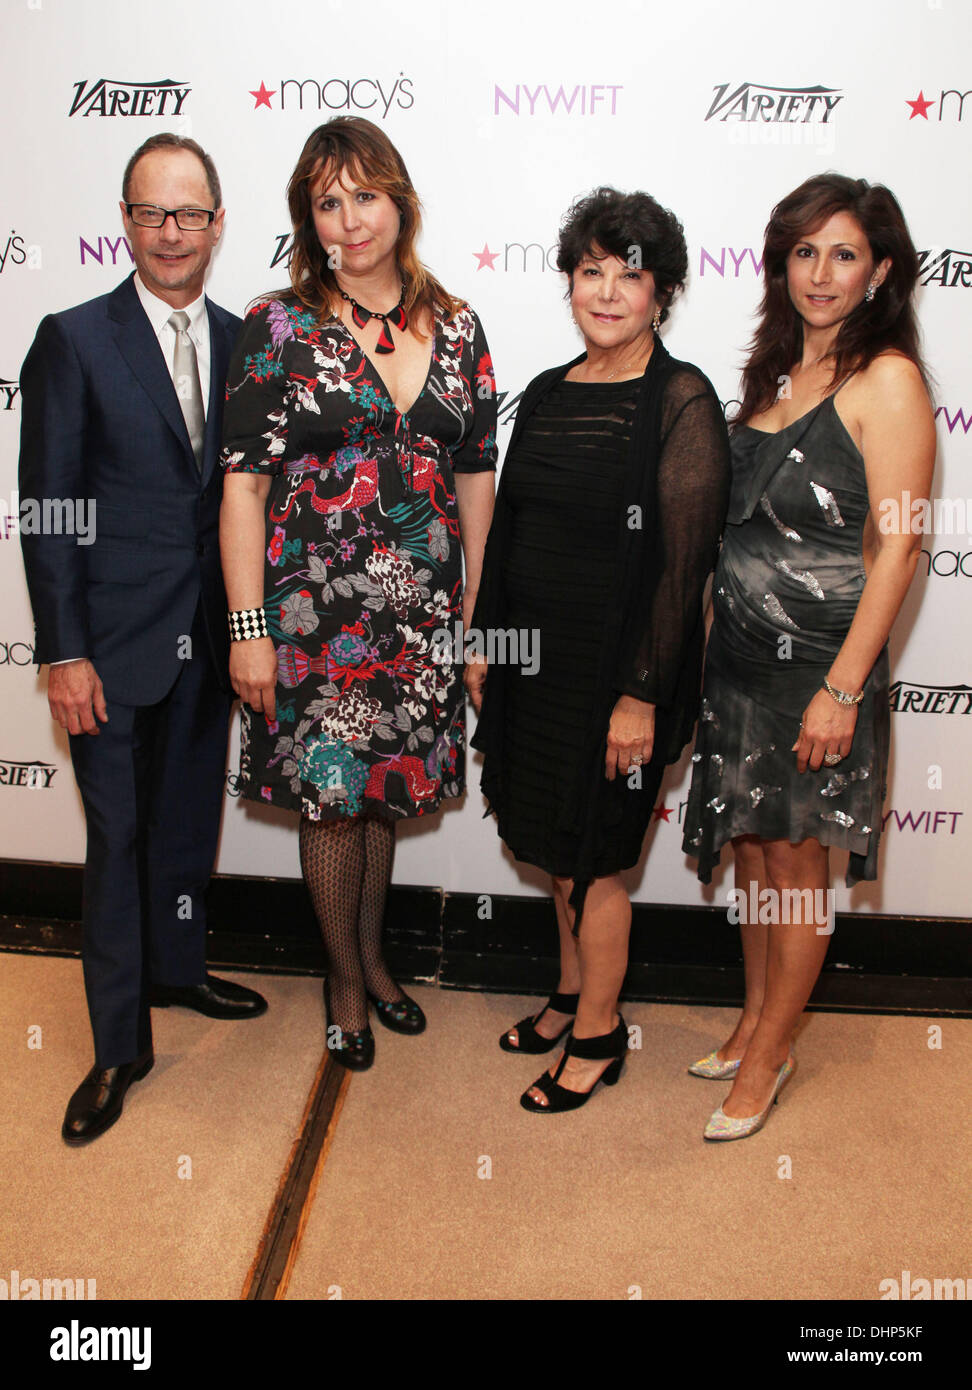 John Dunn, Lisa Padovani, Francesca Paris, Michelle Paris NYWIFT's 13th Annual Designing Women Awards held at Macy's - Arrivals  New York City, USA - 10.05.12 Stock Photo